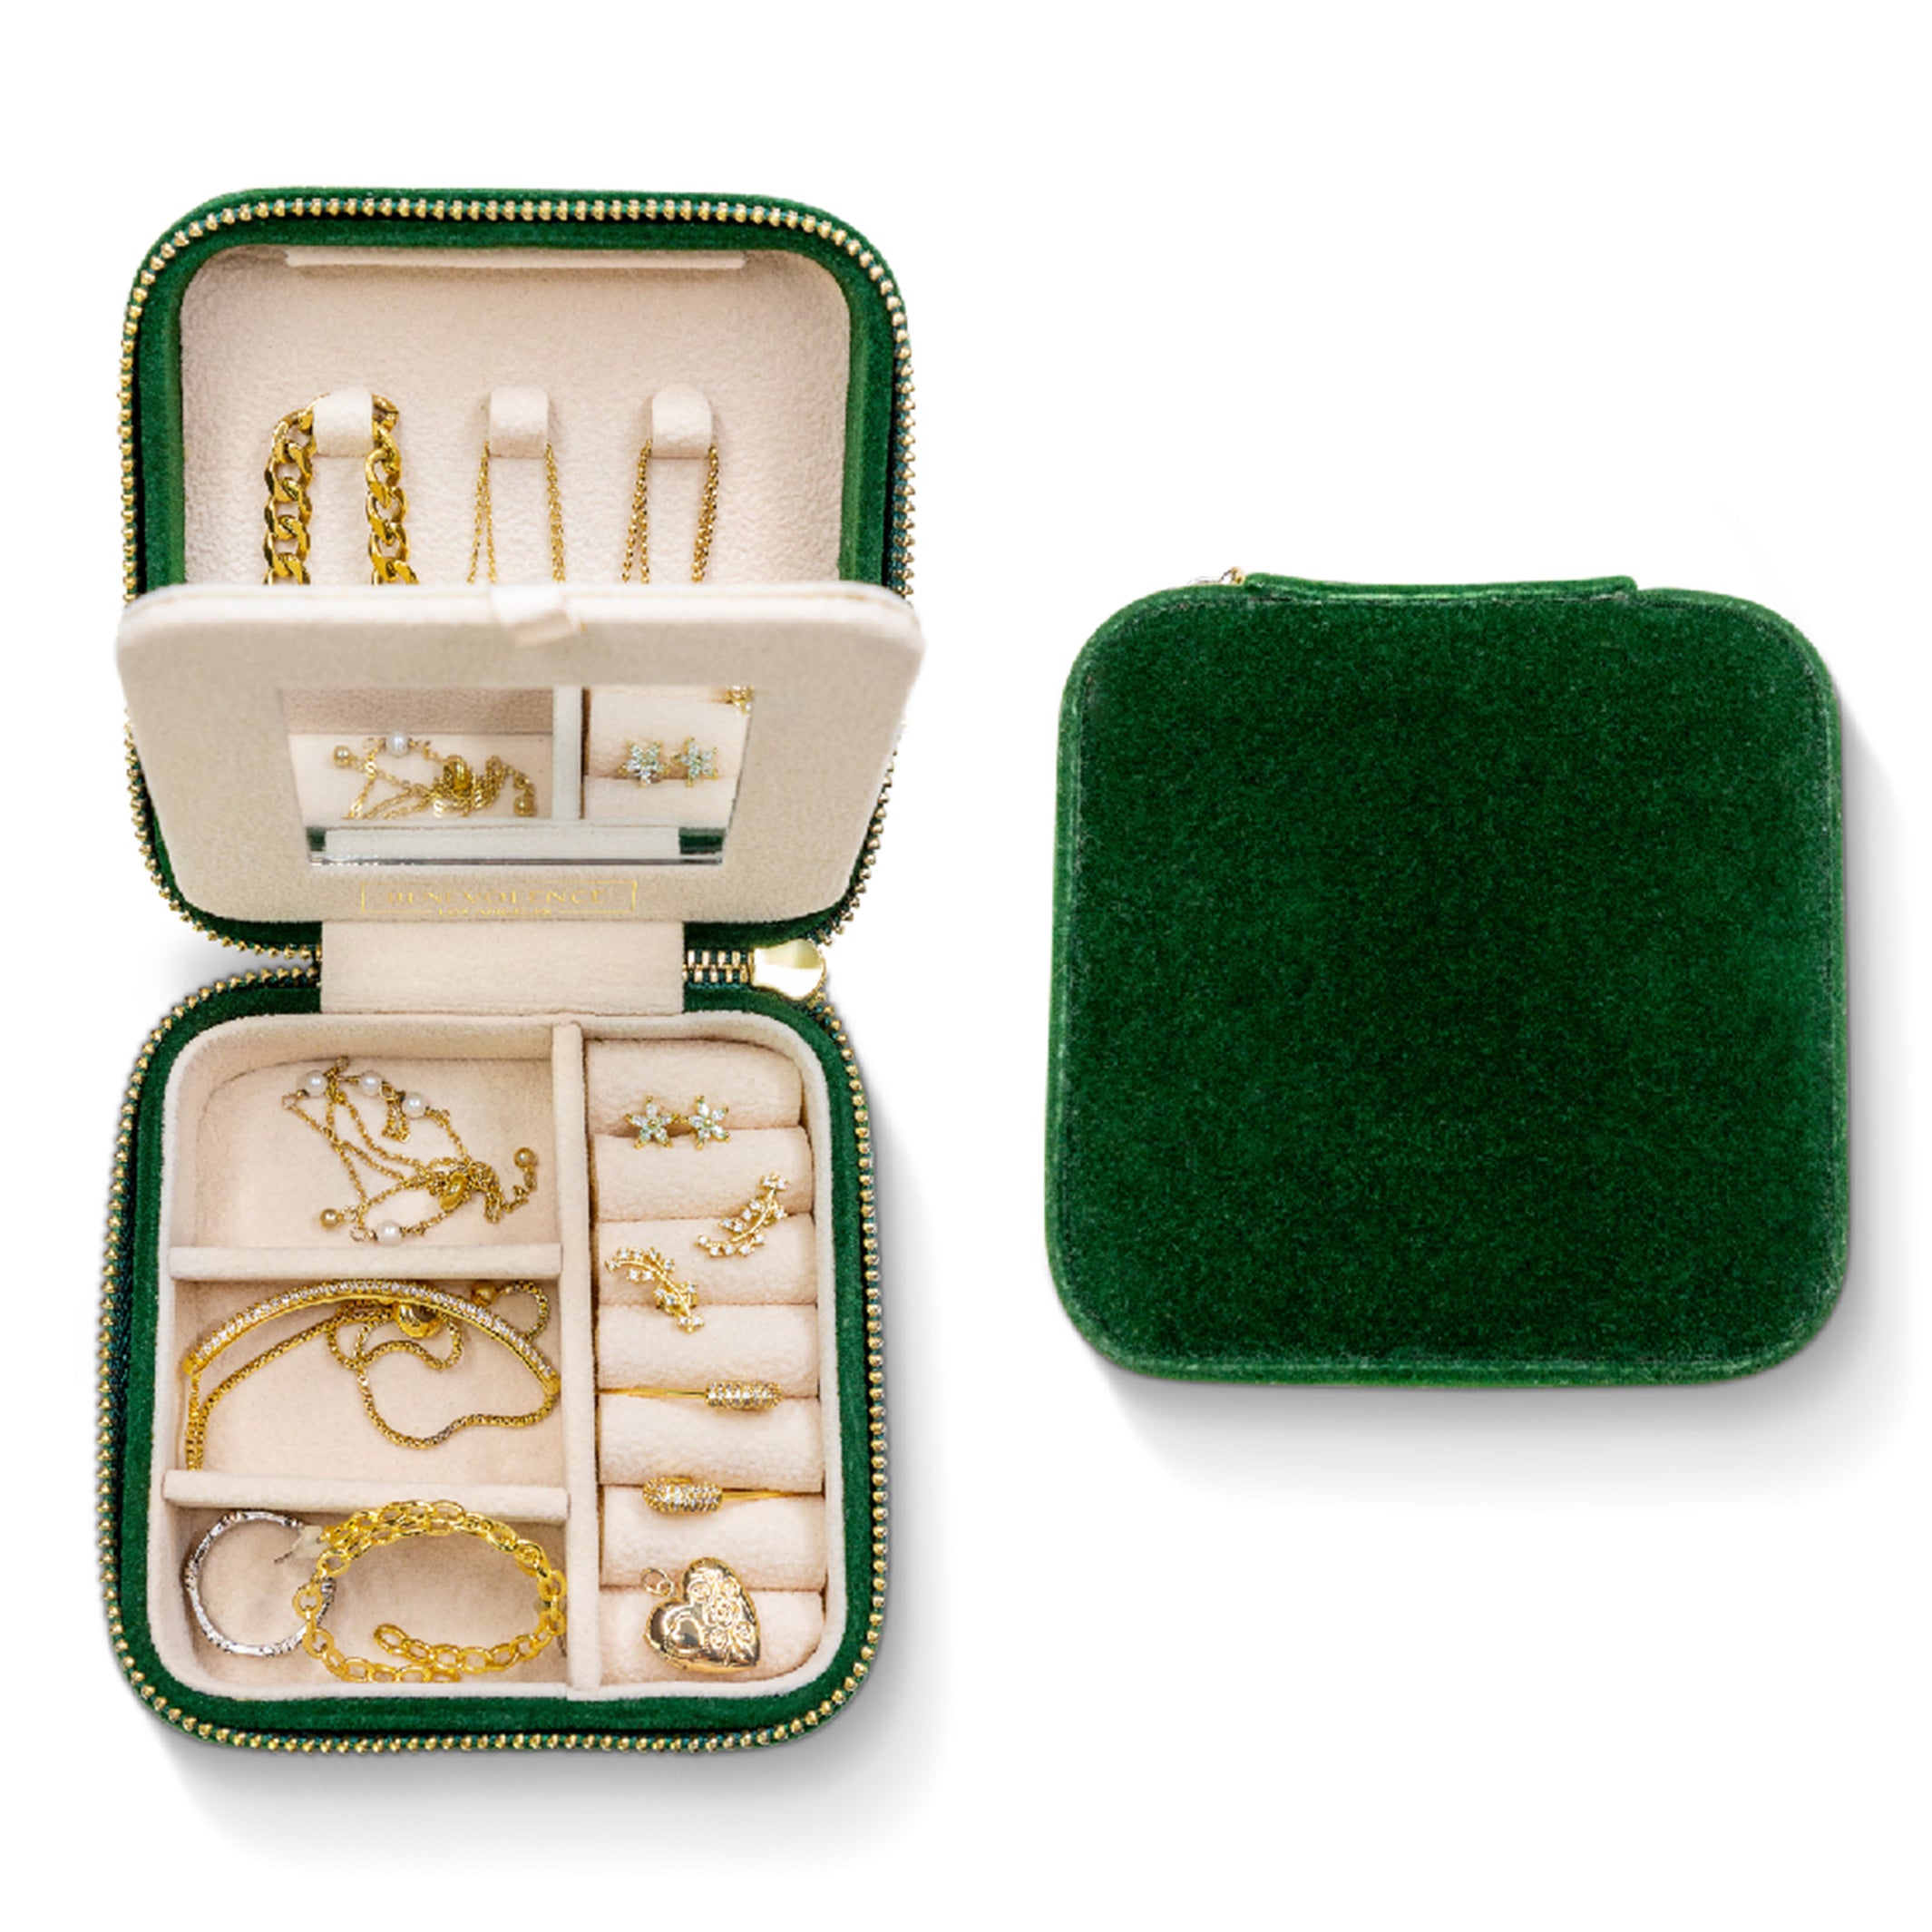 Jewelry Box Monogram - Art of Living - Trunks and Travel